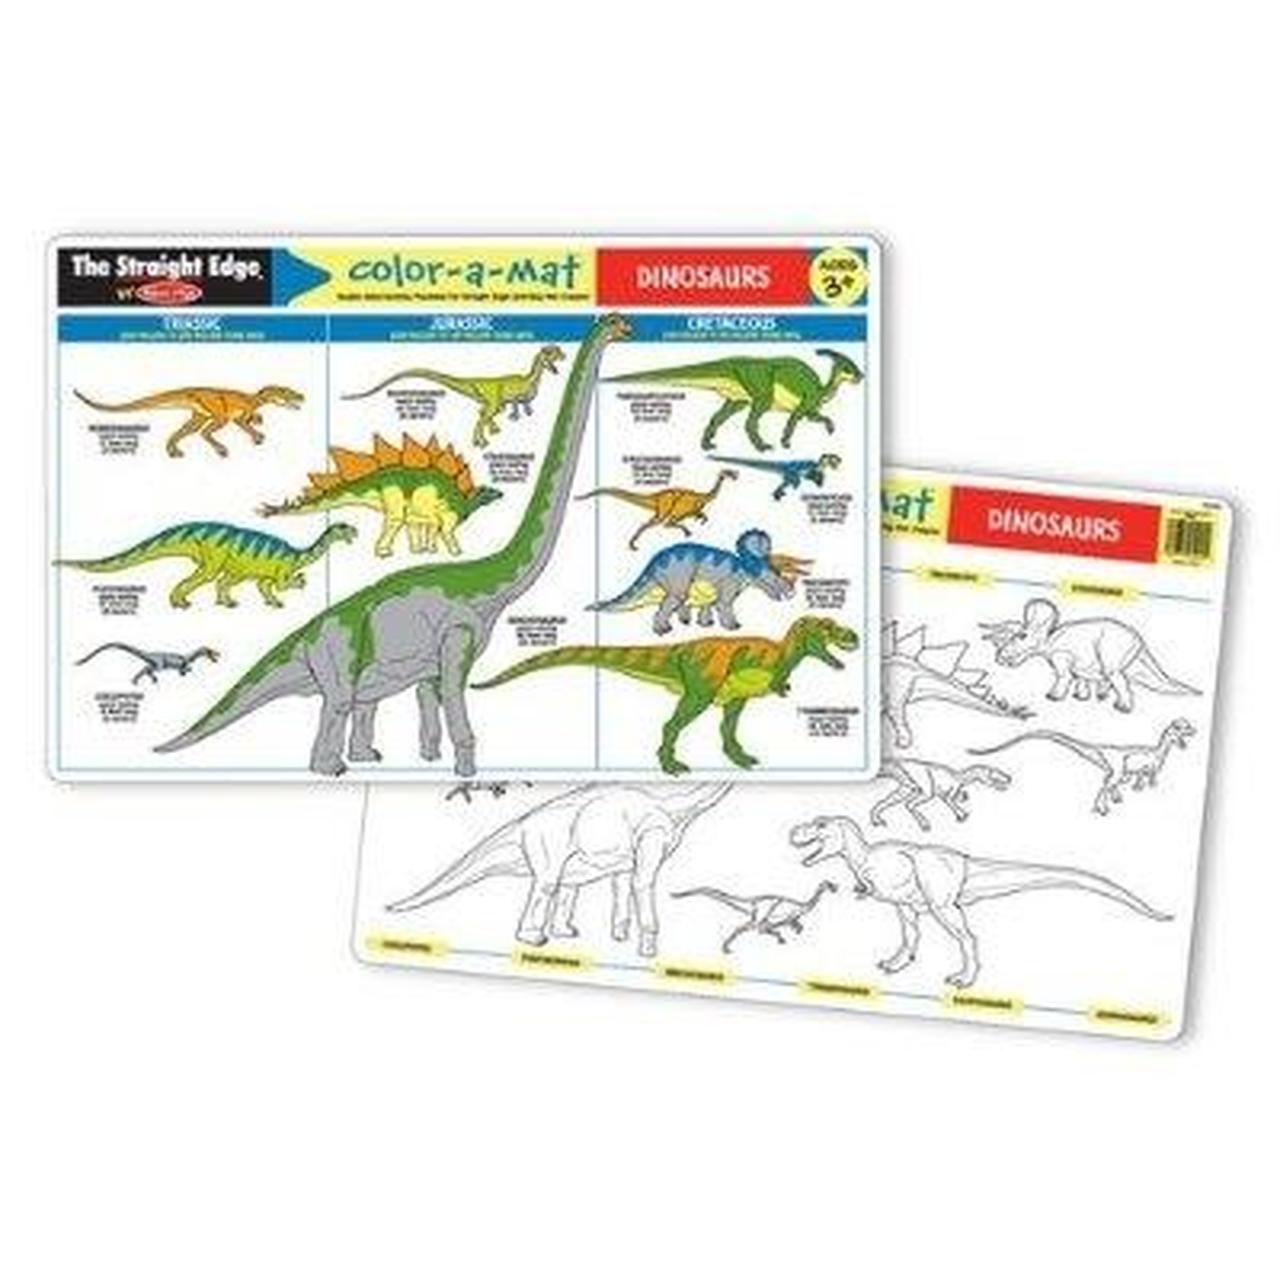 Color-A-Mat Dinosaurs